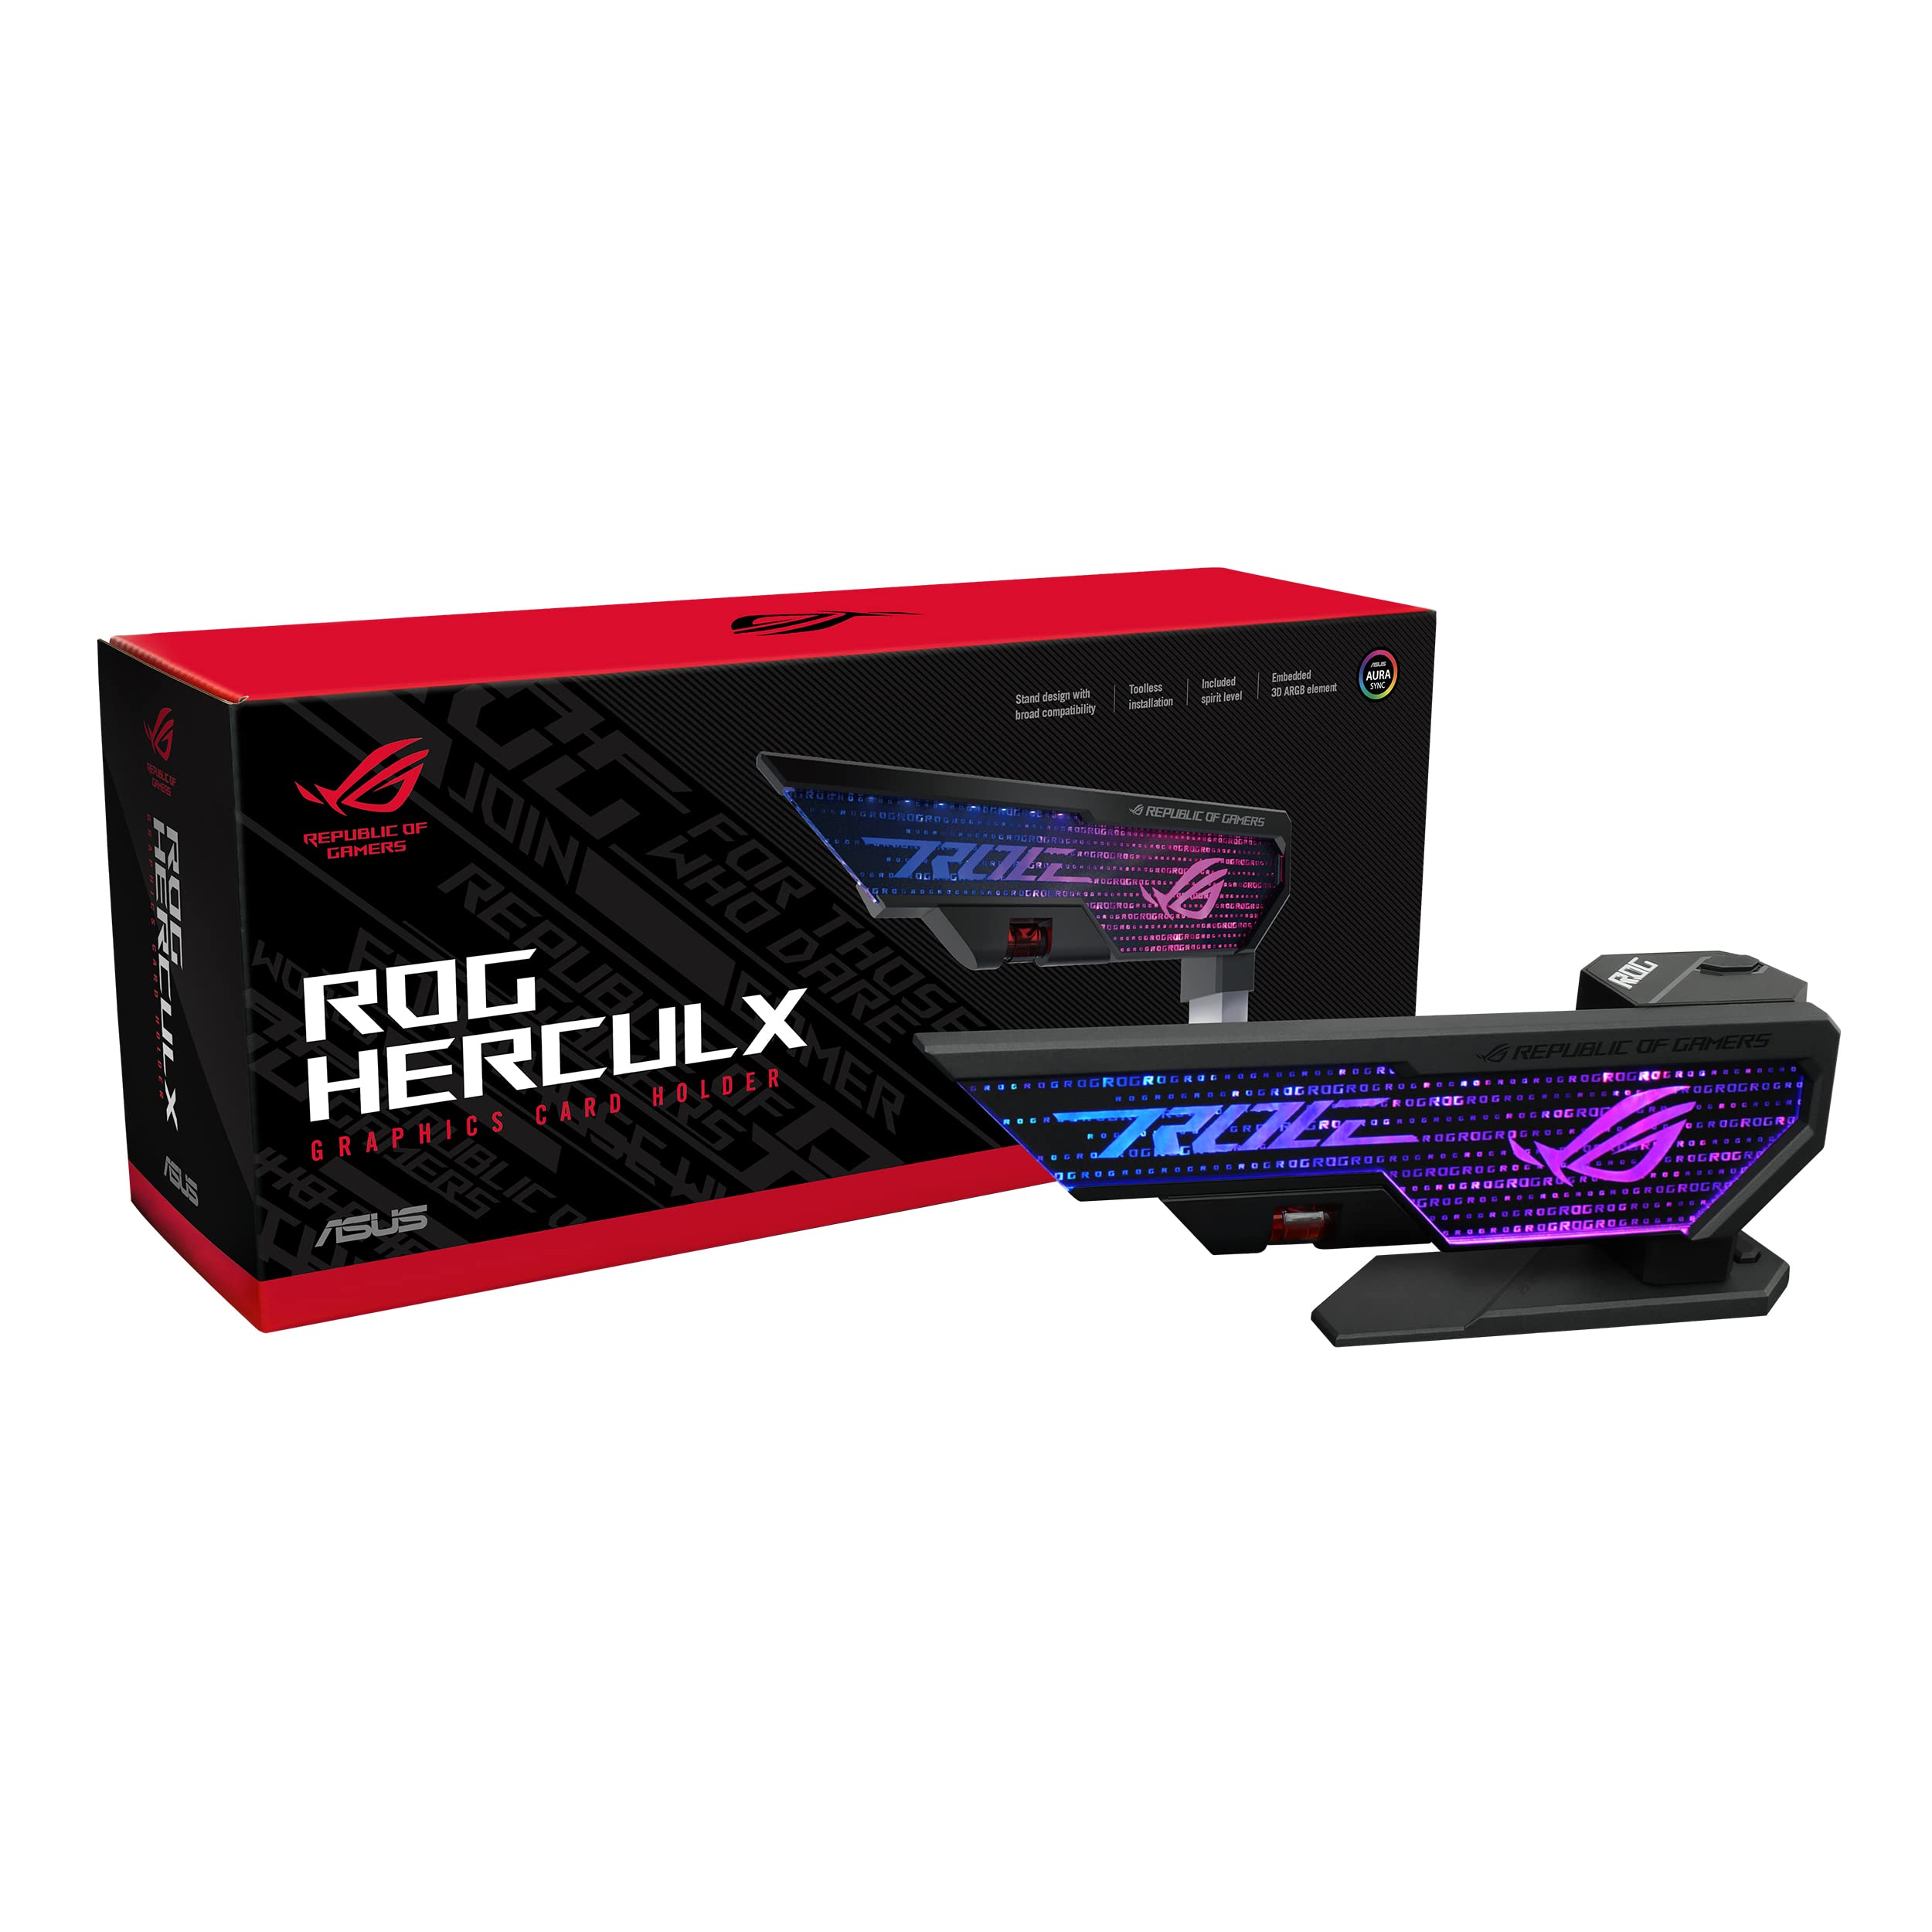 XH01 ROG HERCULX GRAPCARD HOLD